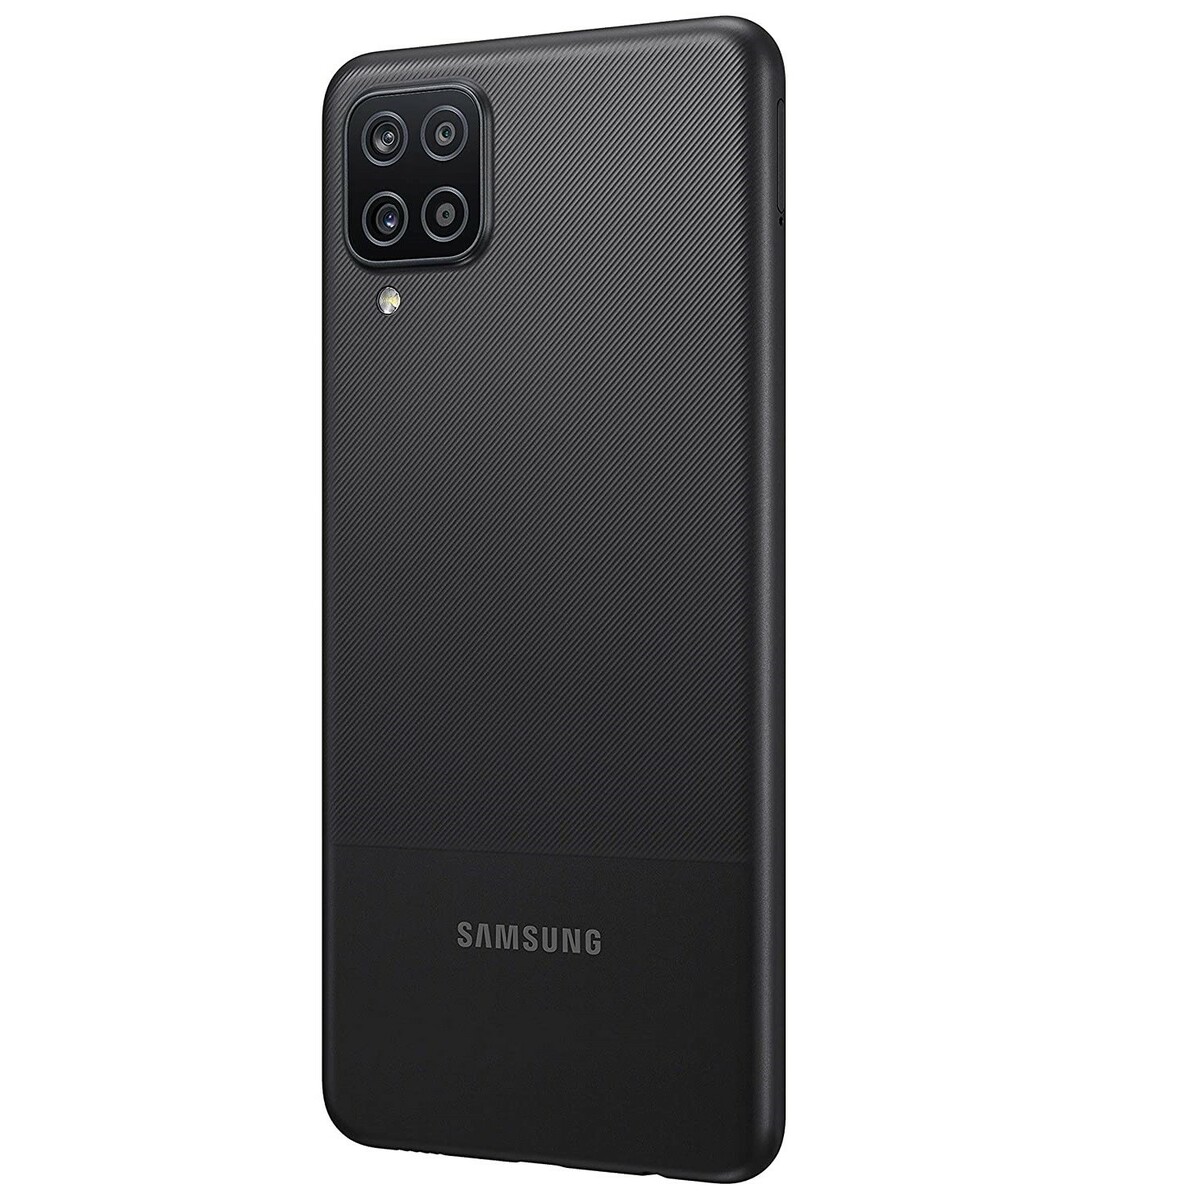 Samsung M127 M12 4GB/64GB Black